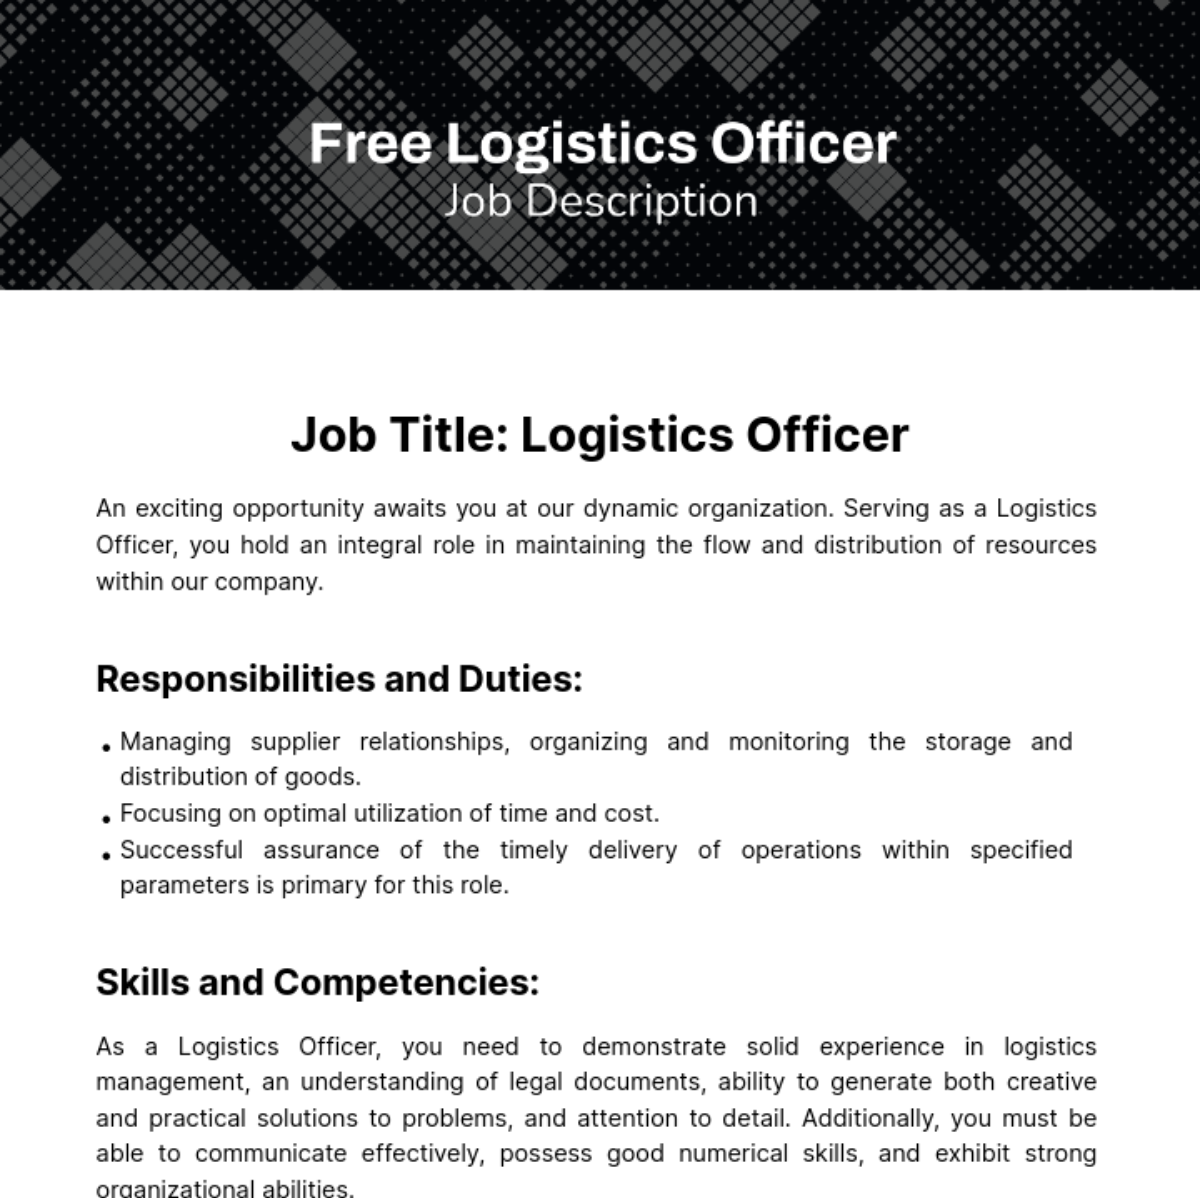 Free Logistics Officer Job Description Template